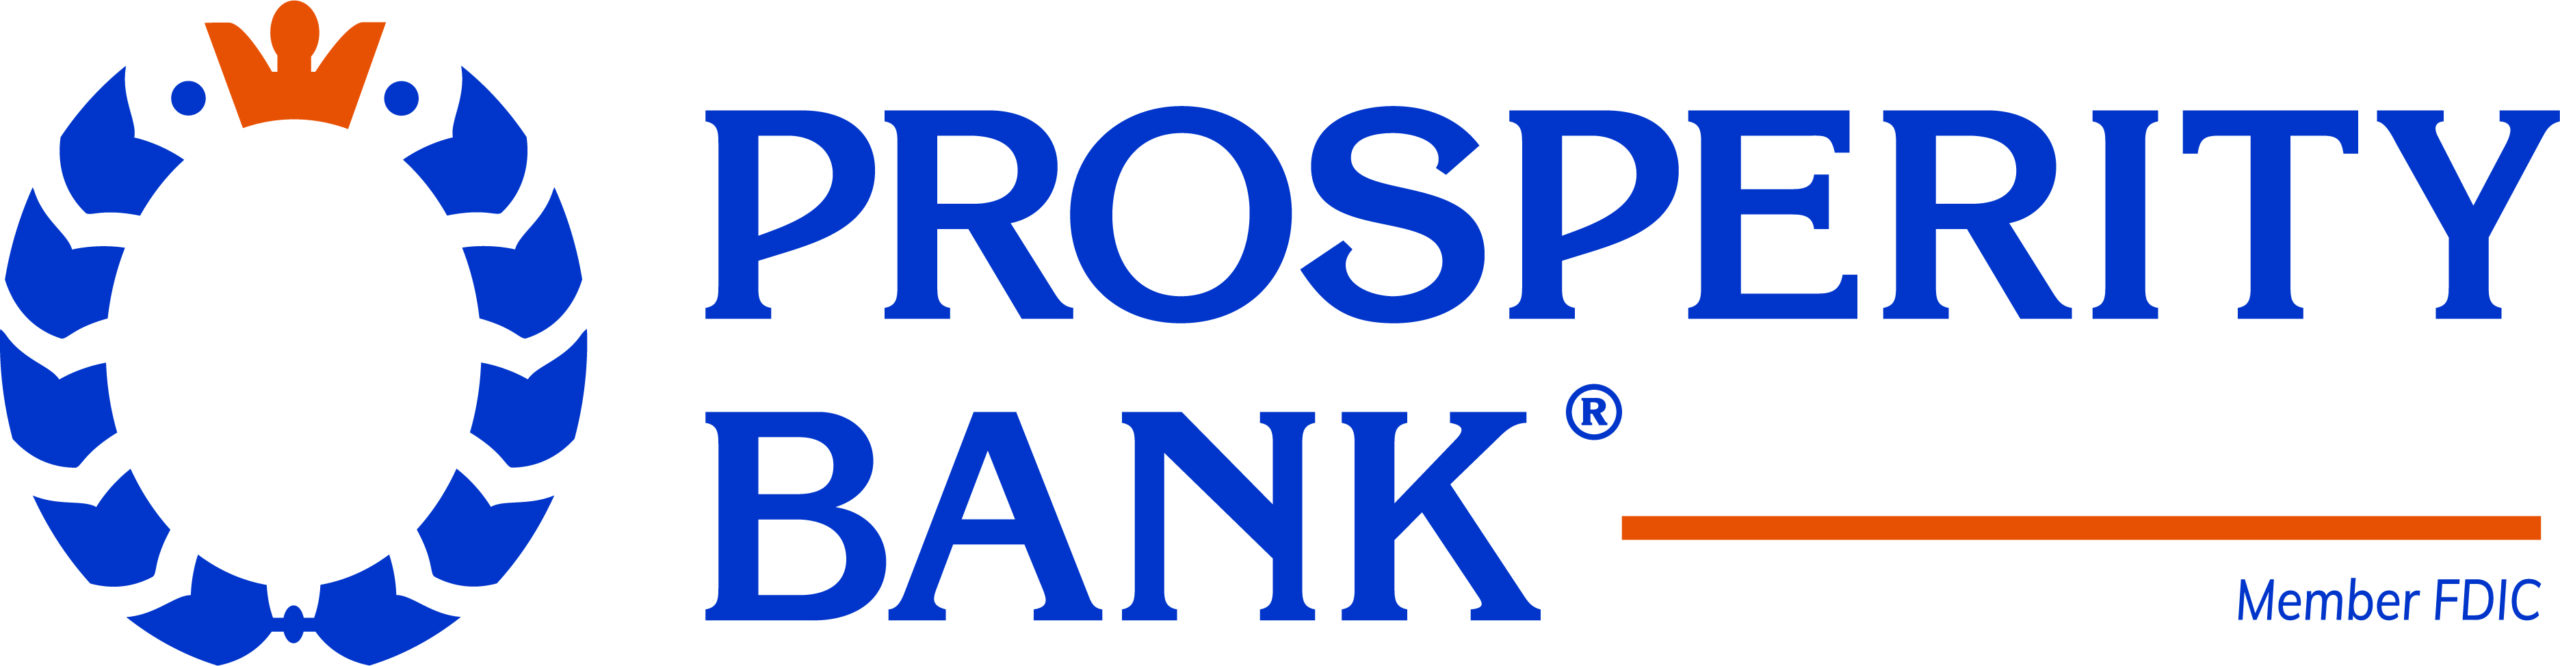 Prosperty-Bank-Stacked-Logo-Vector-scaled.jpg